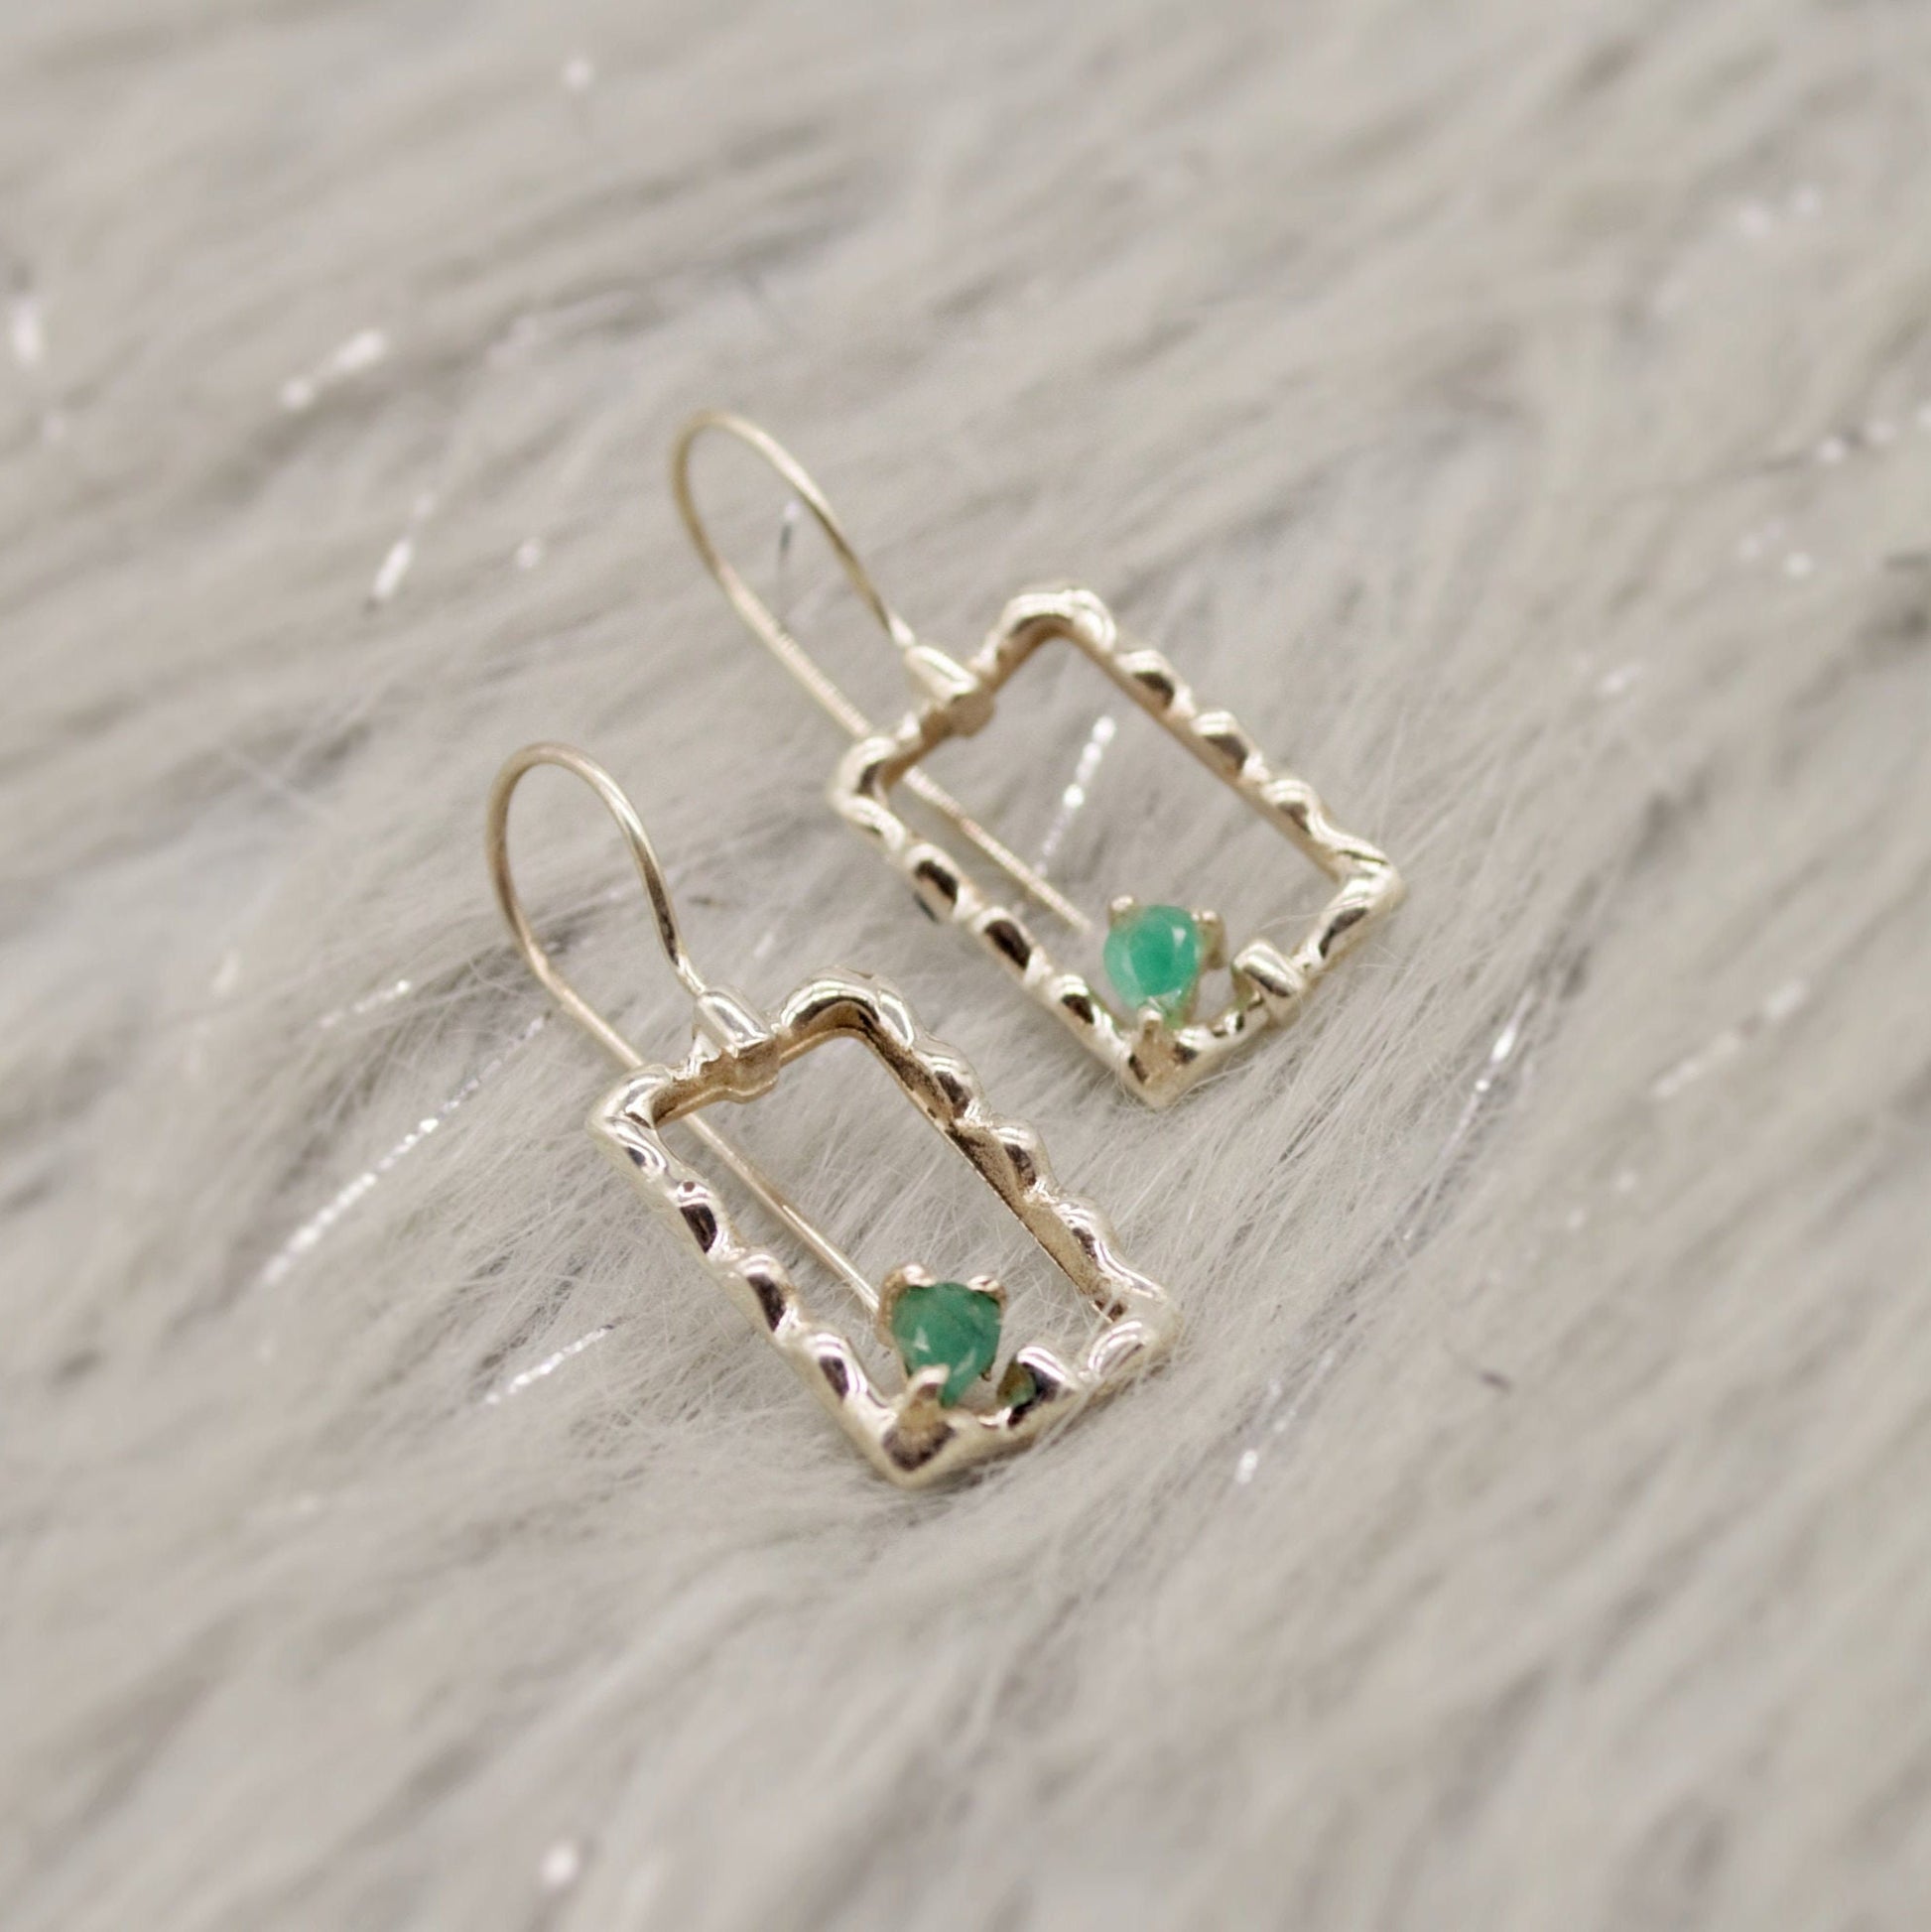 Emerald Earrings, Sterling Silver Earrings, Green Gemstone Earrings, May Birthstone, Birthday Gifts For Her, Christmas, Birthday Gifts